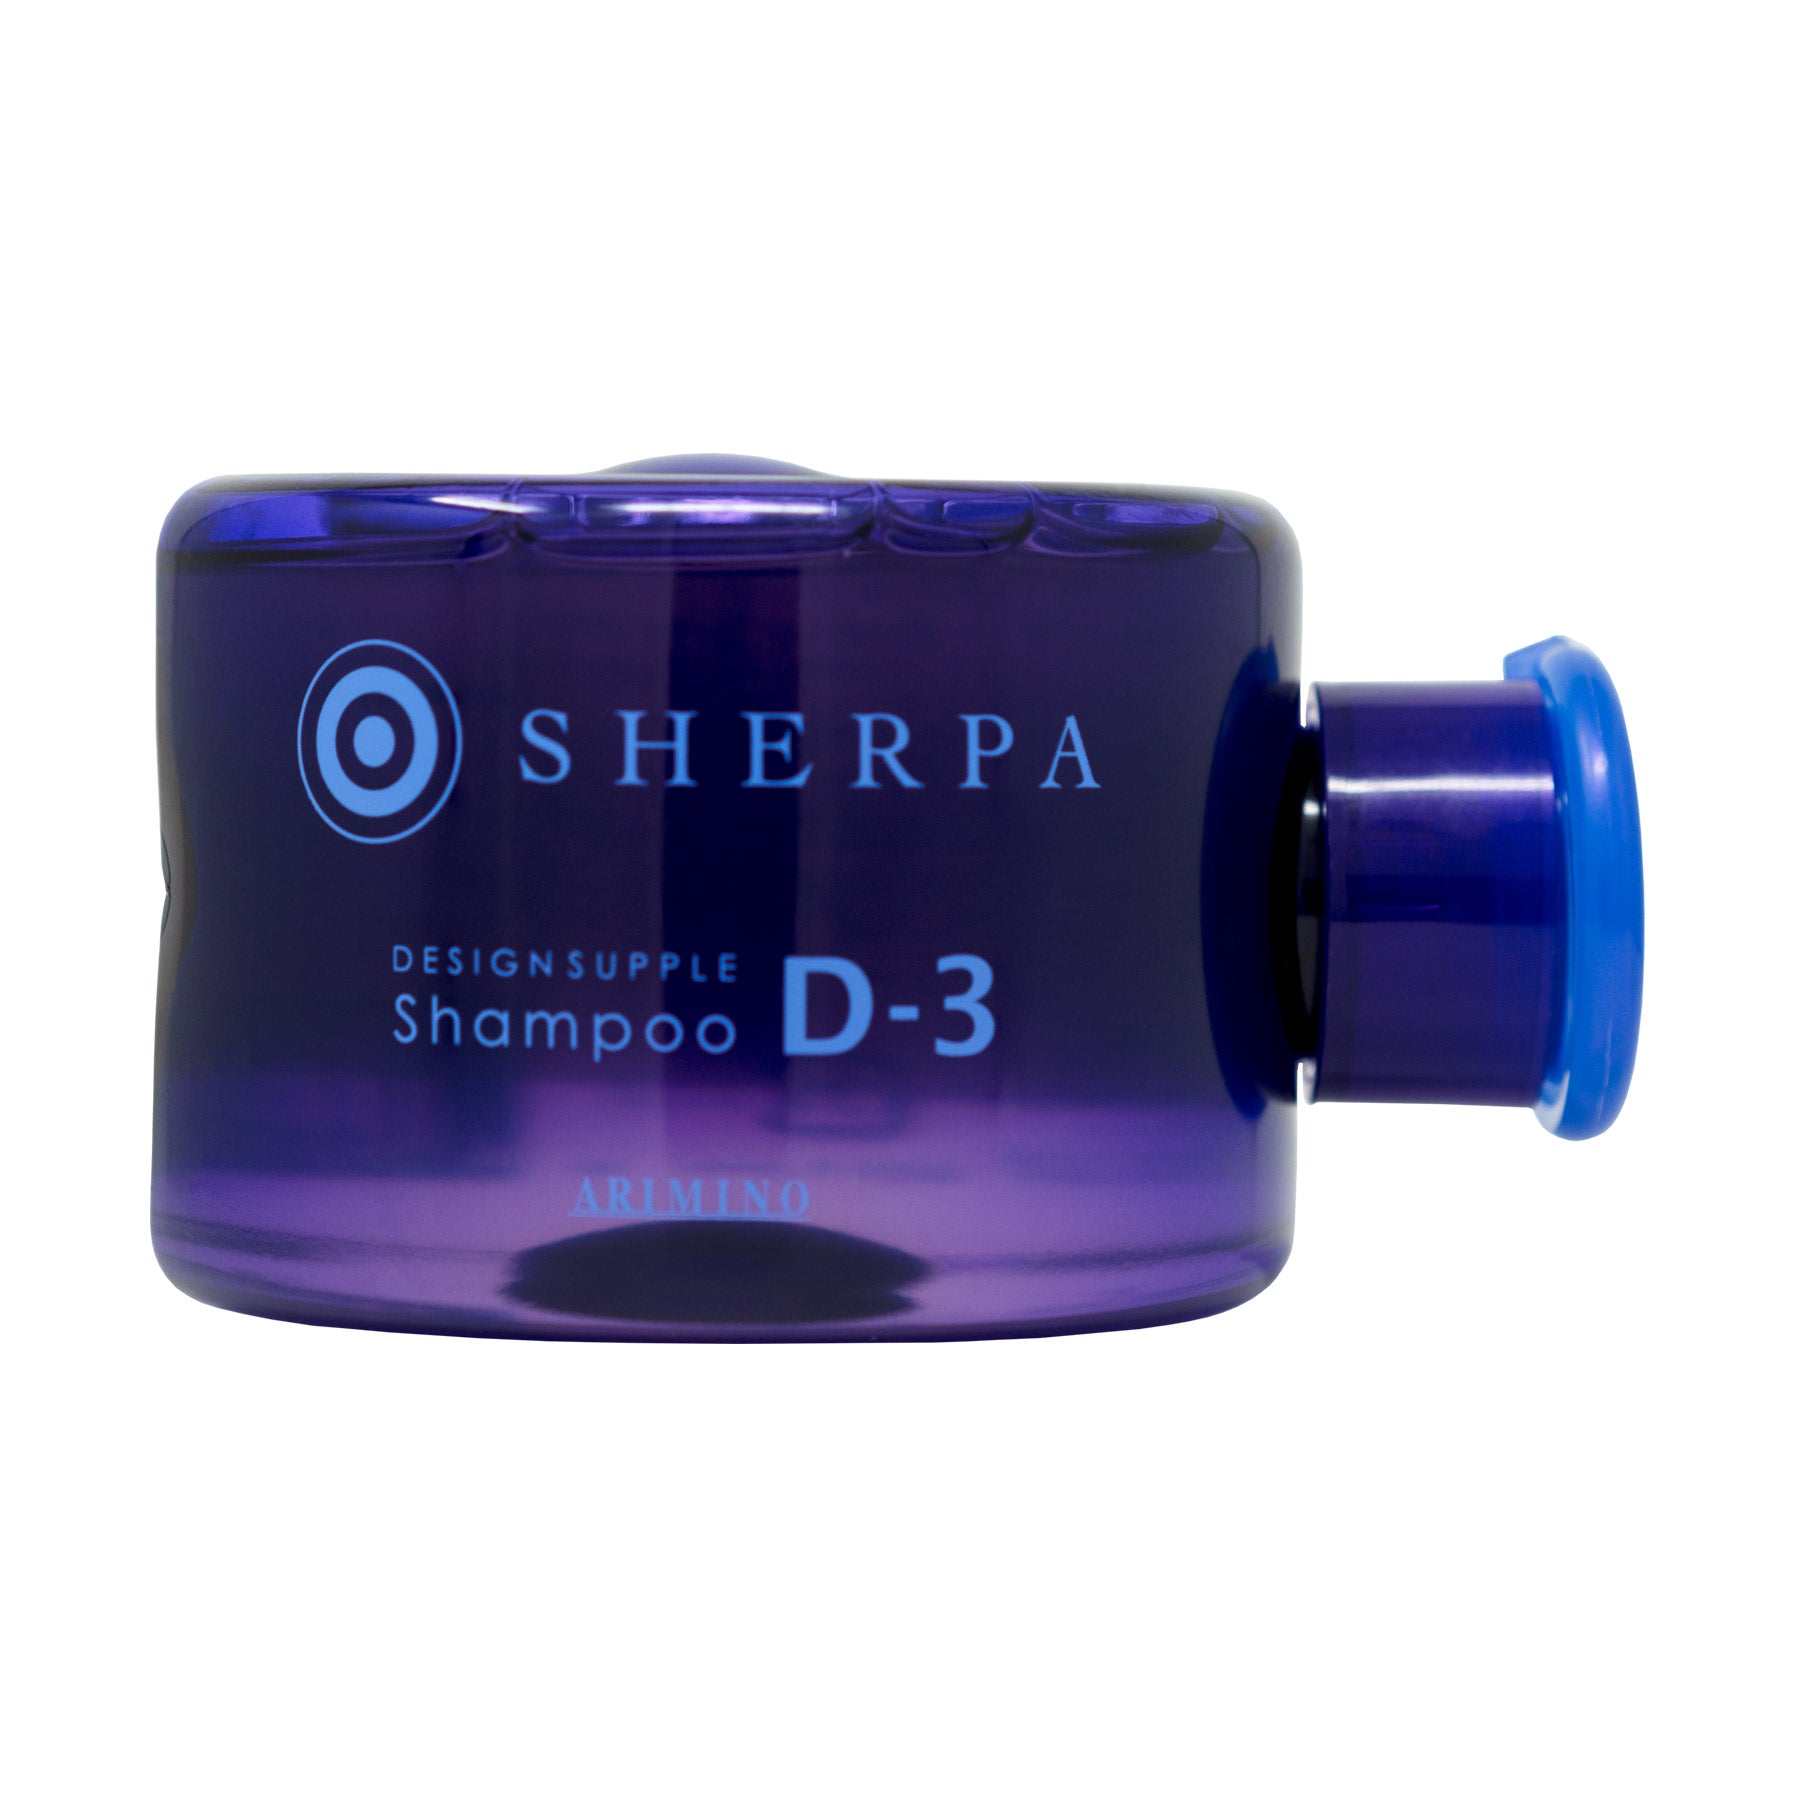 Arimino Sherpa Design Supple Shampoo D-3